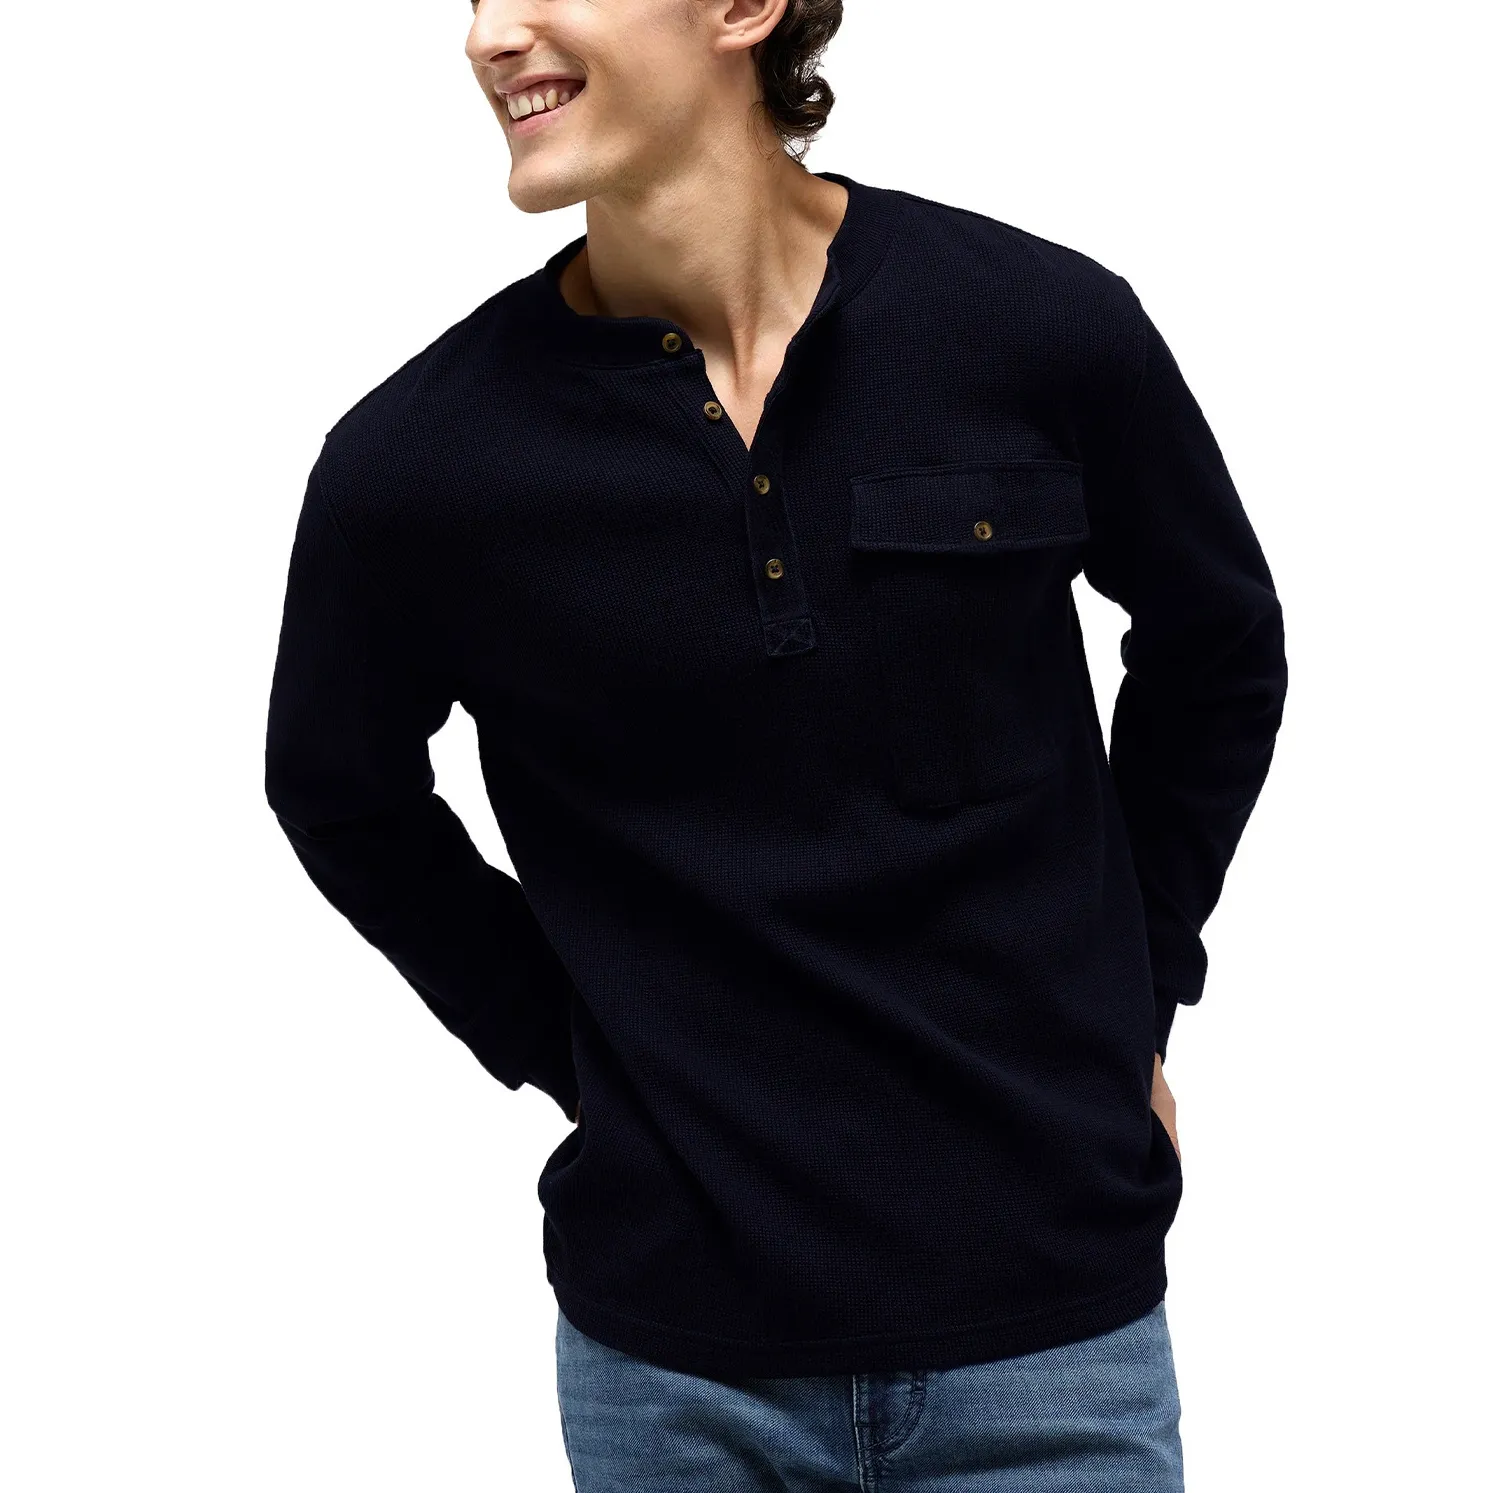 Individuelles Herren-Summer-T-Shirt langärmelig hochwertiger atmungsaktiver Waffelstoff Standardfit Herren-T-Shirt Kleidung Hersteller